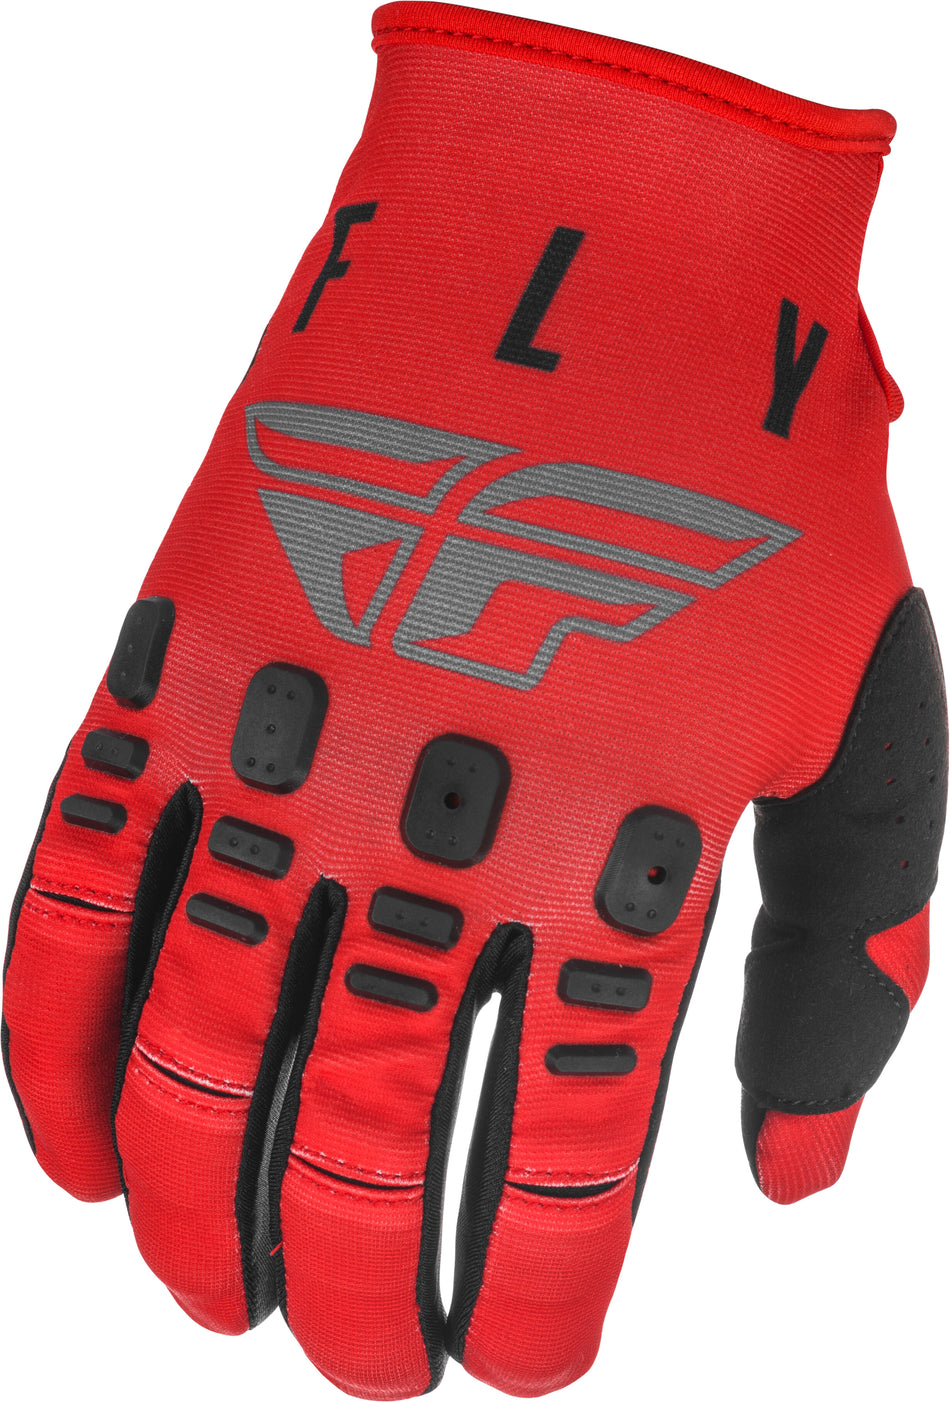 FLY RACING Kinetic K121 Gloves Red/Grey/Black Sz 07 374-41207